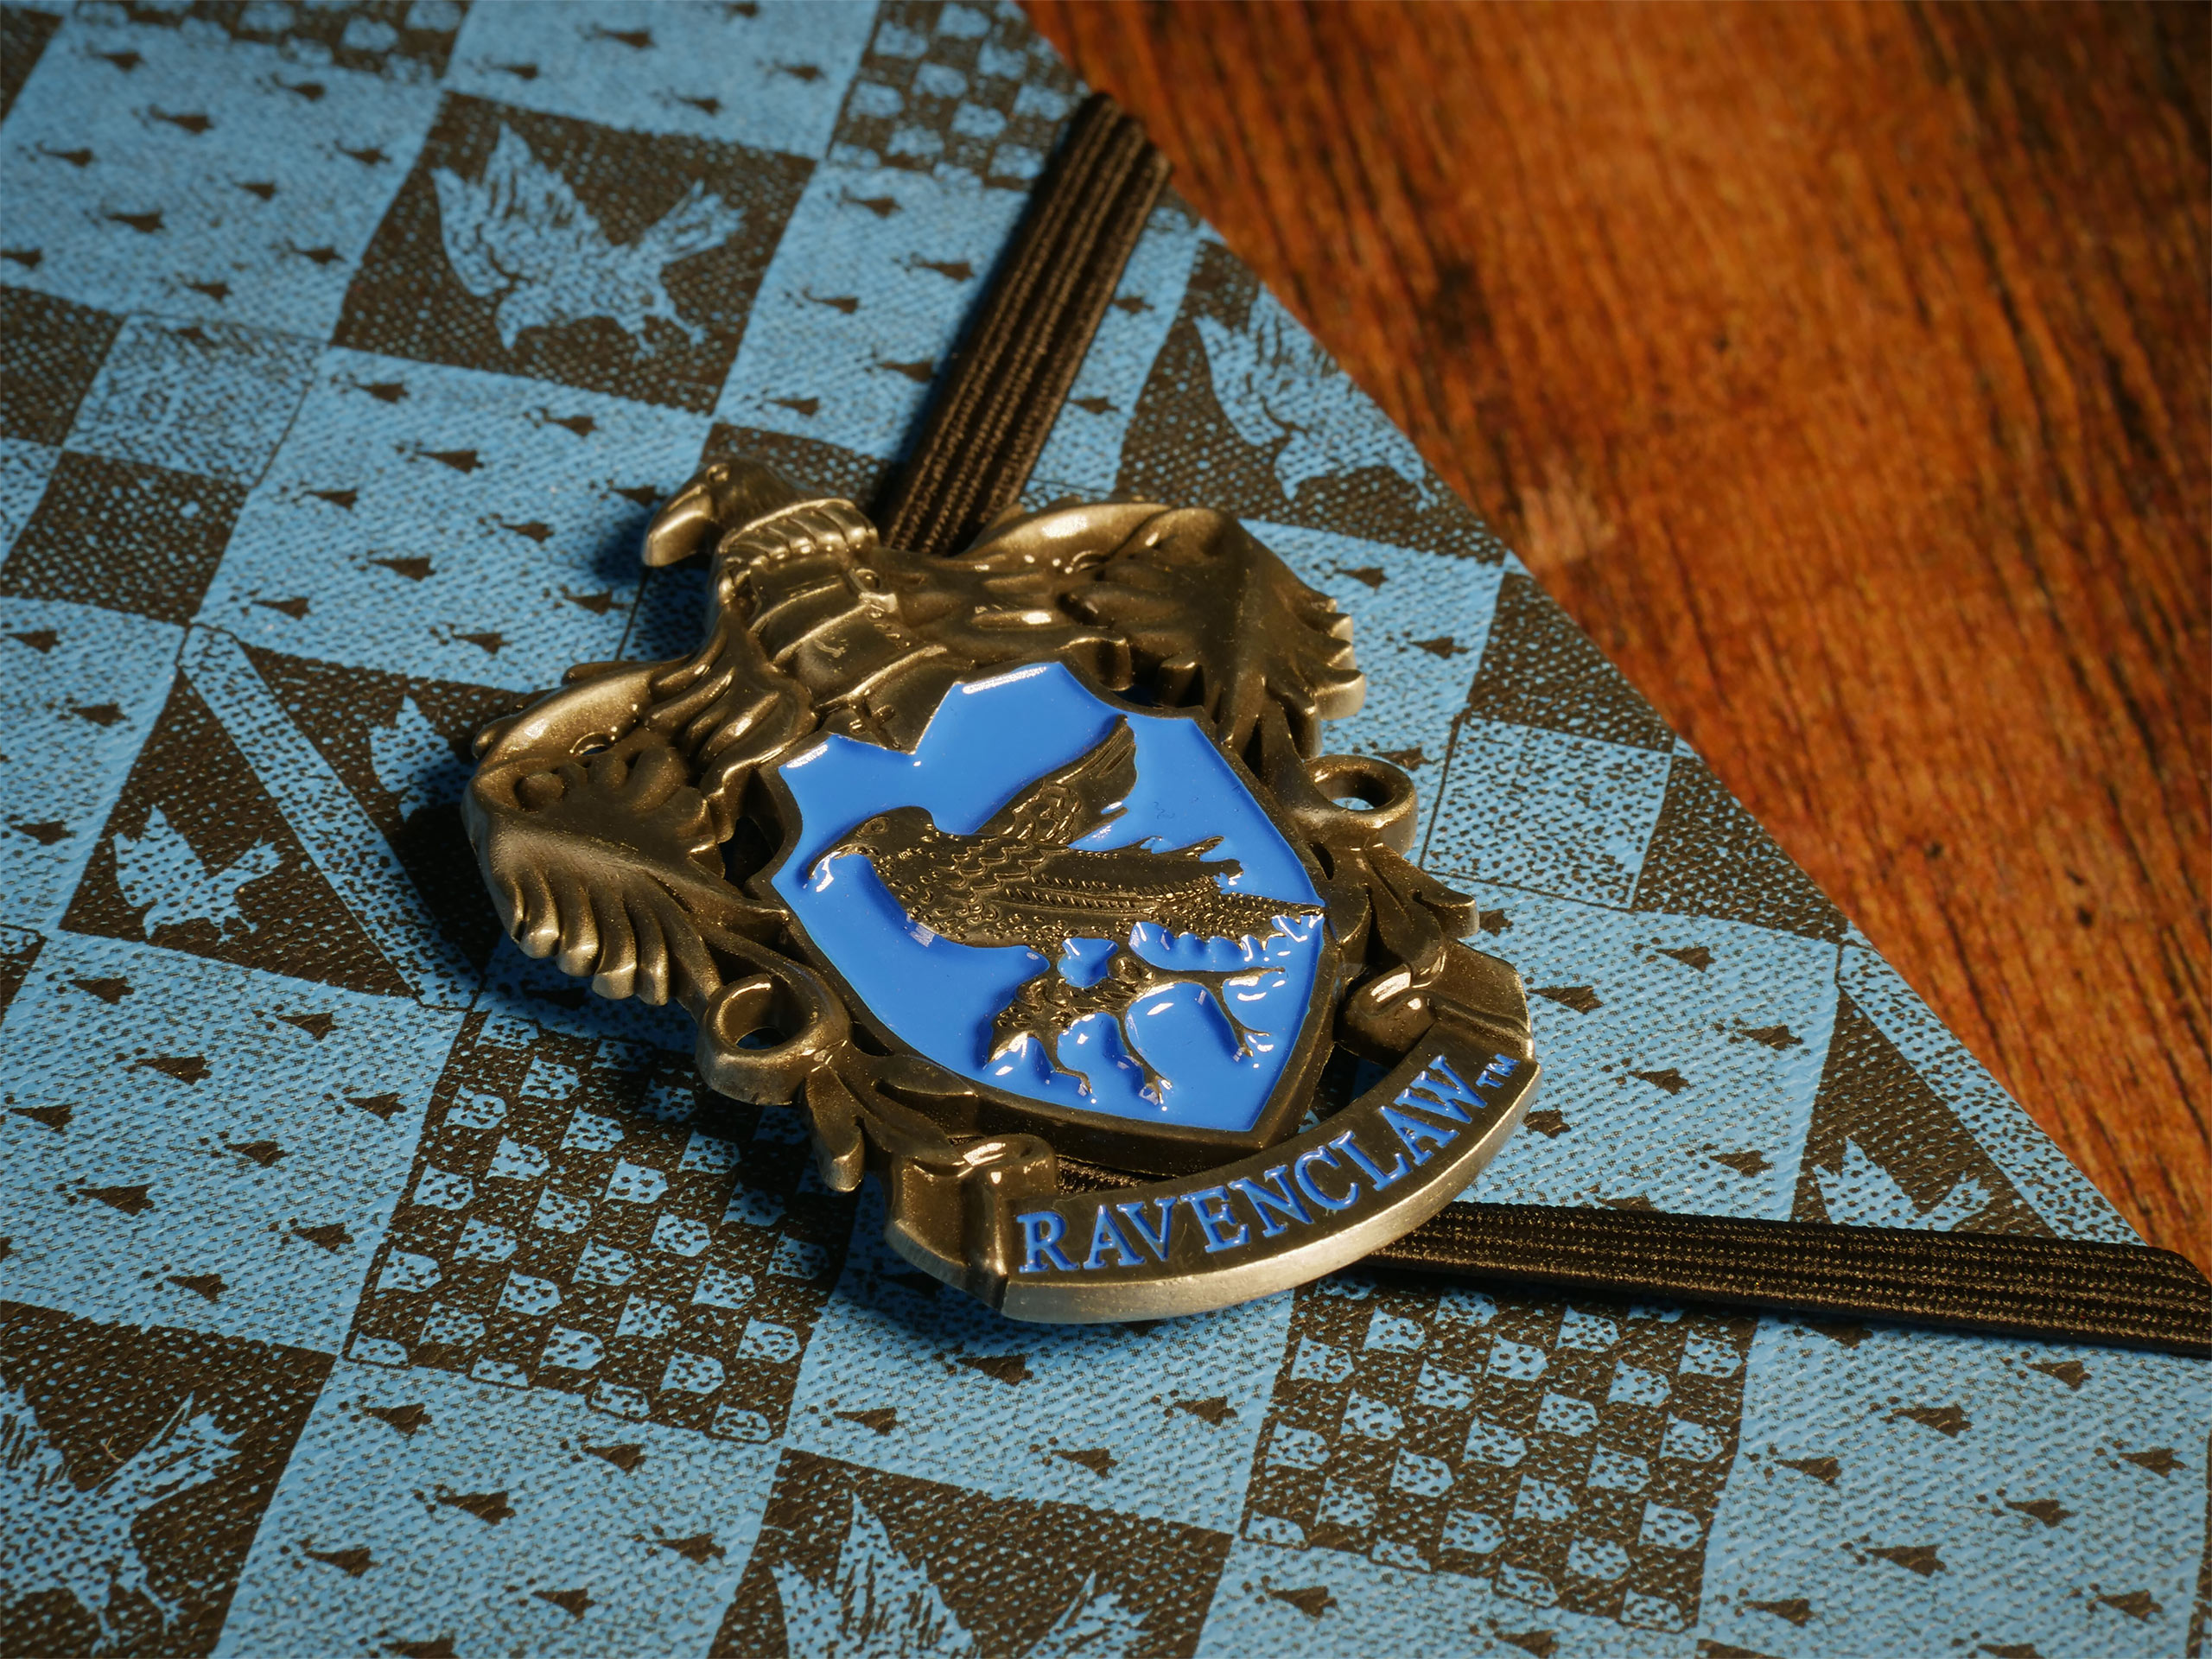 Harry Potter - Ravenclaw Wappen Deluxe Notizbuch